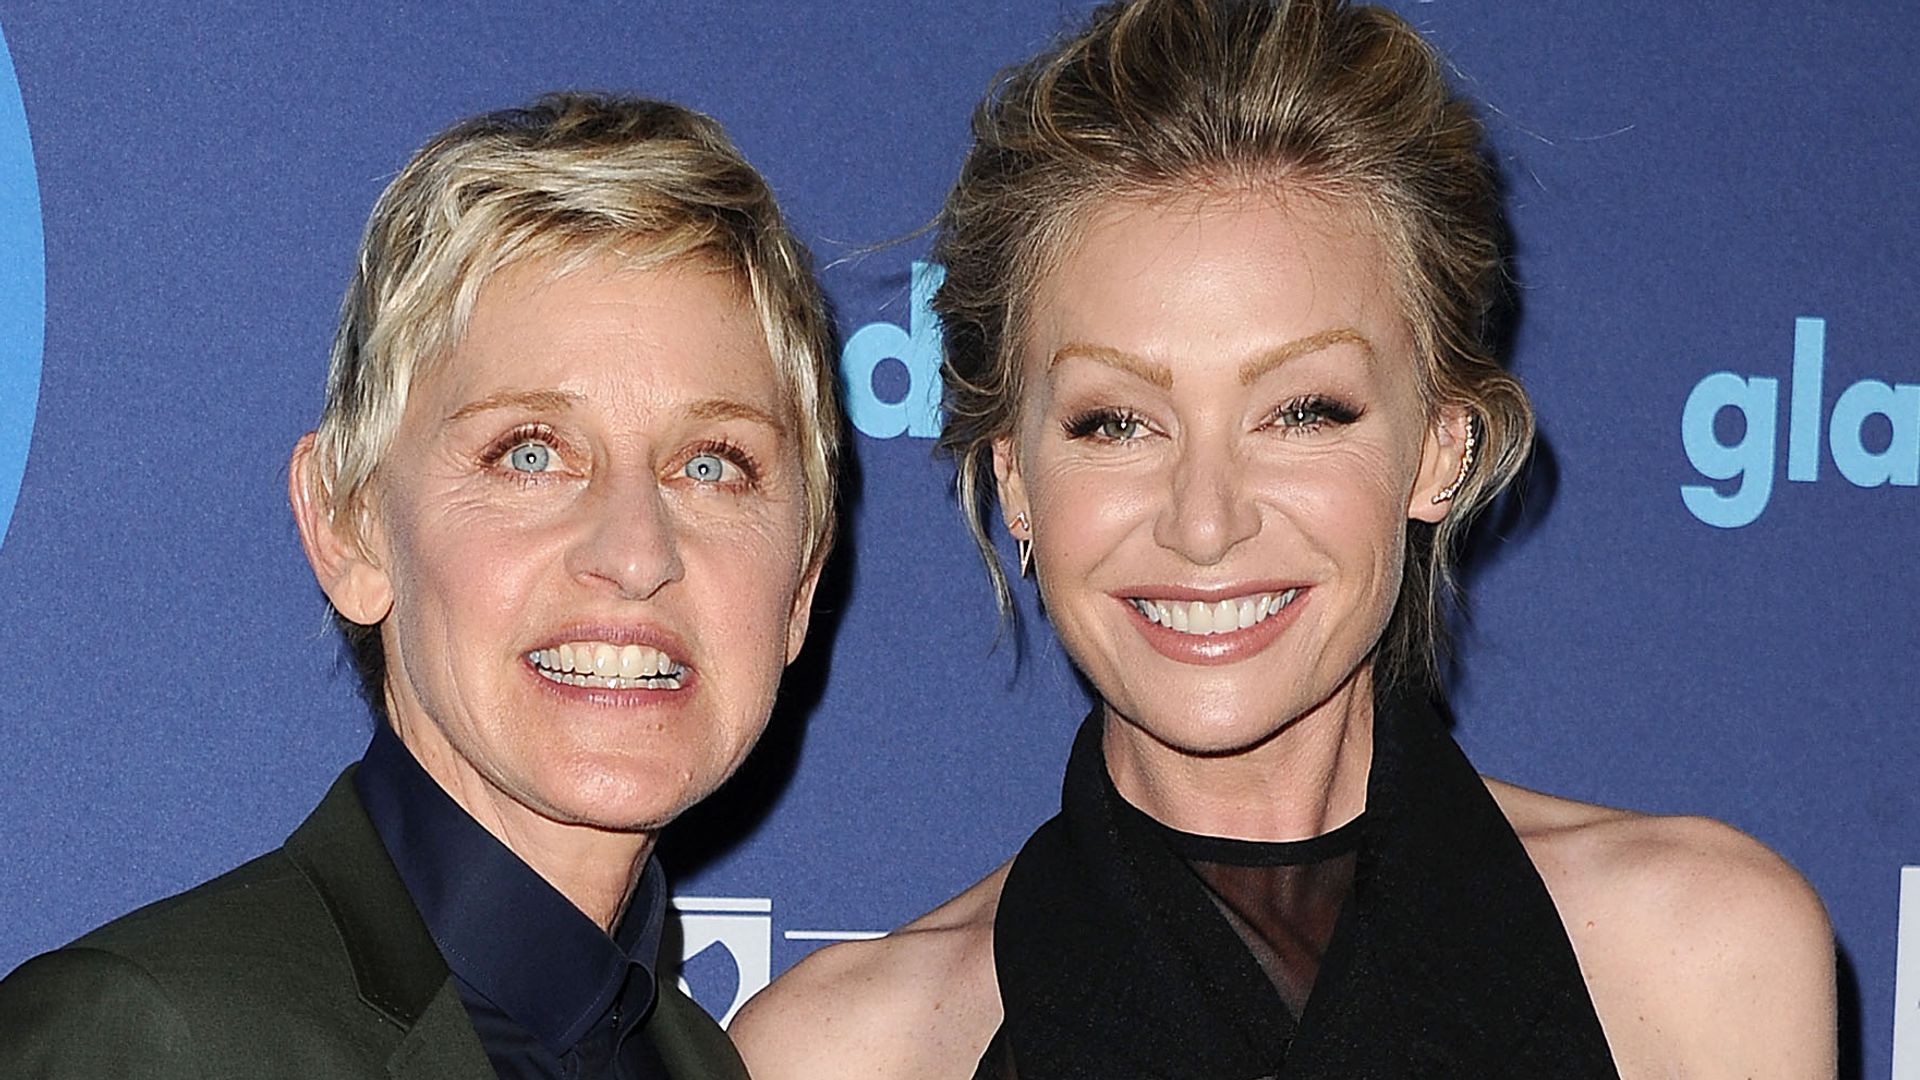 Ellen DeGeneres and Portia de Rossi attend the 26th annual GLAAD Media Awards in 2015